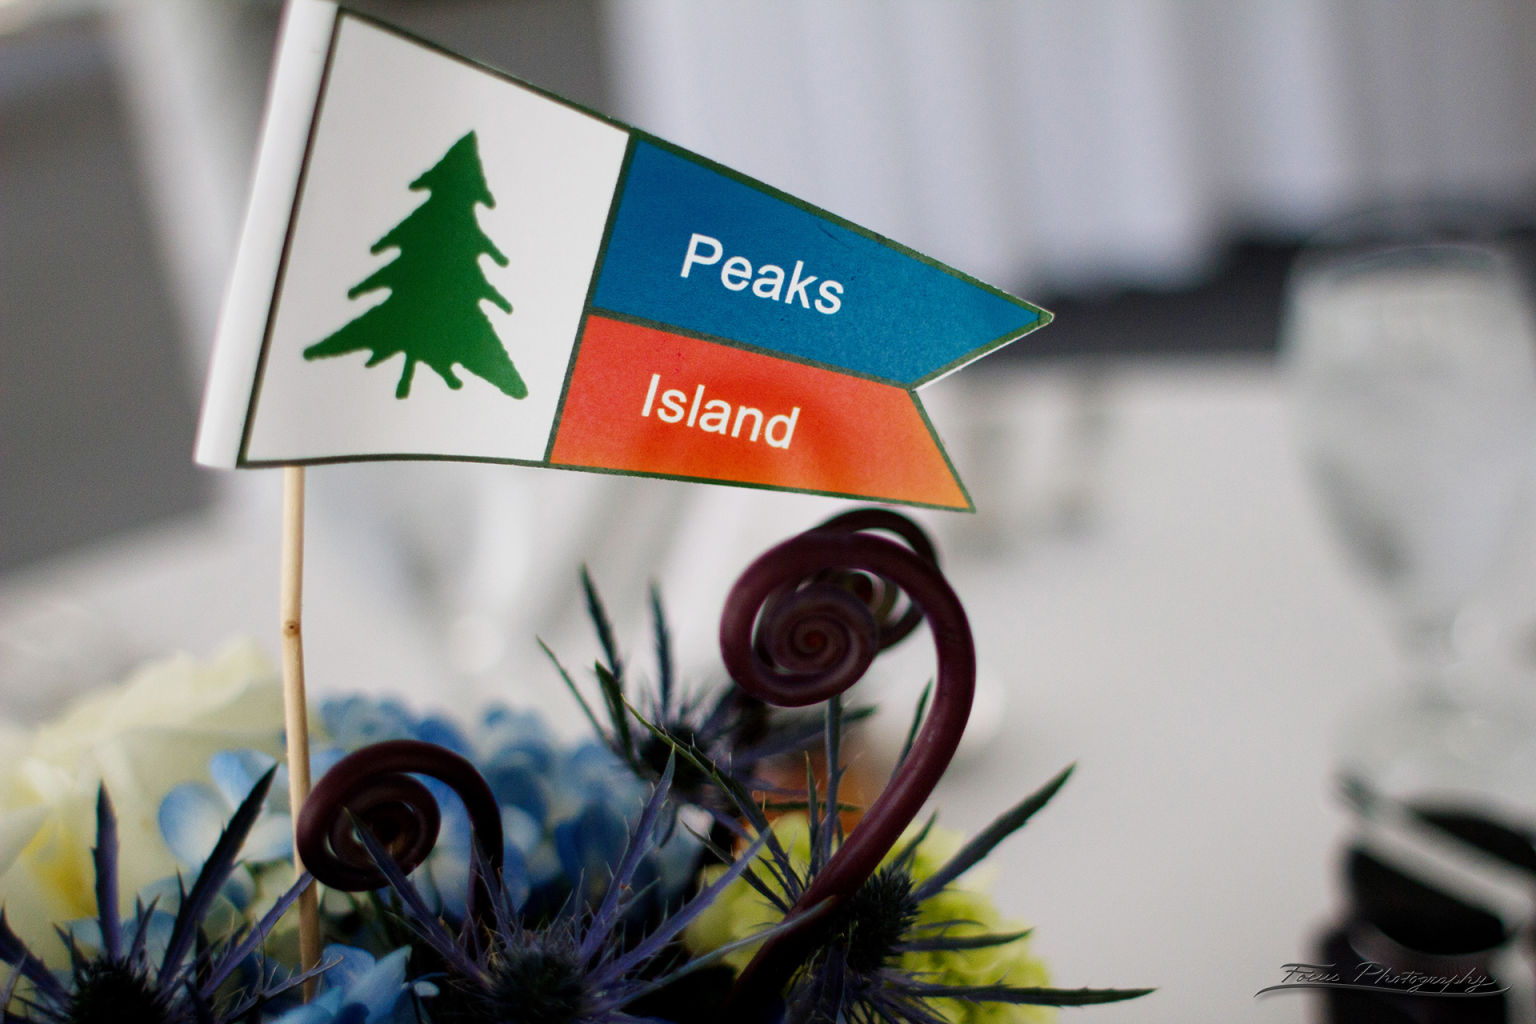 Flag showing peaks island at maine wedding